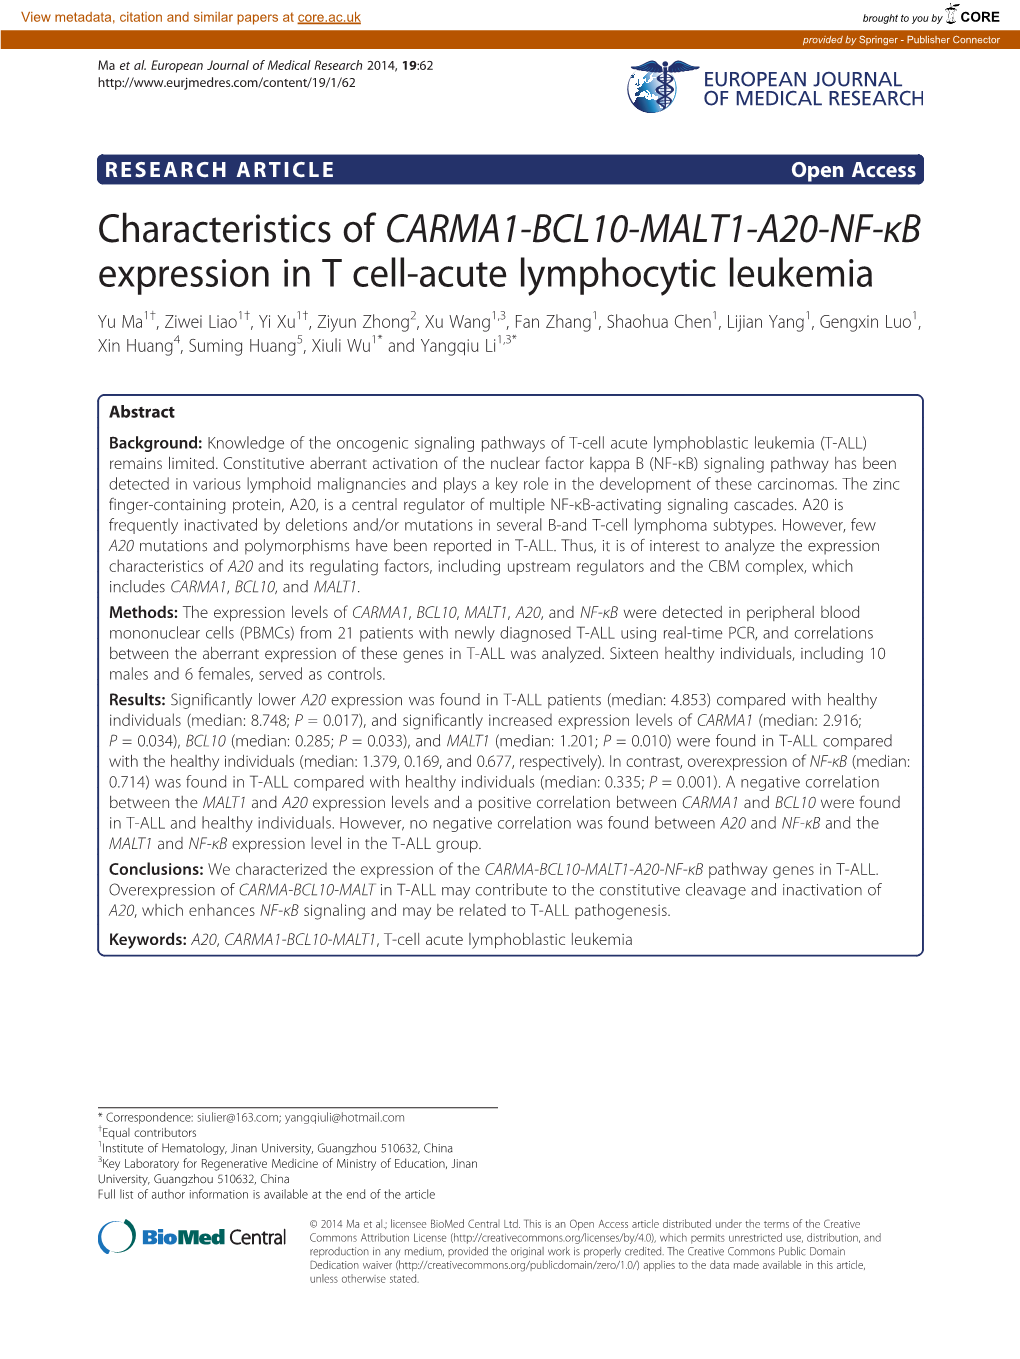 Characteristics of CARMA1-BCL10-MALT1-A20-NF